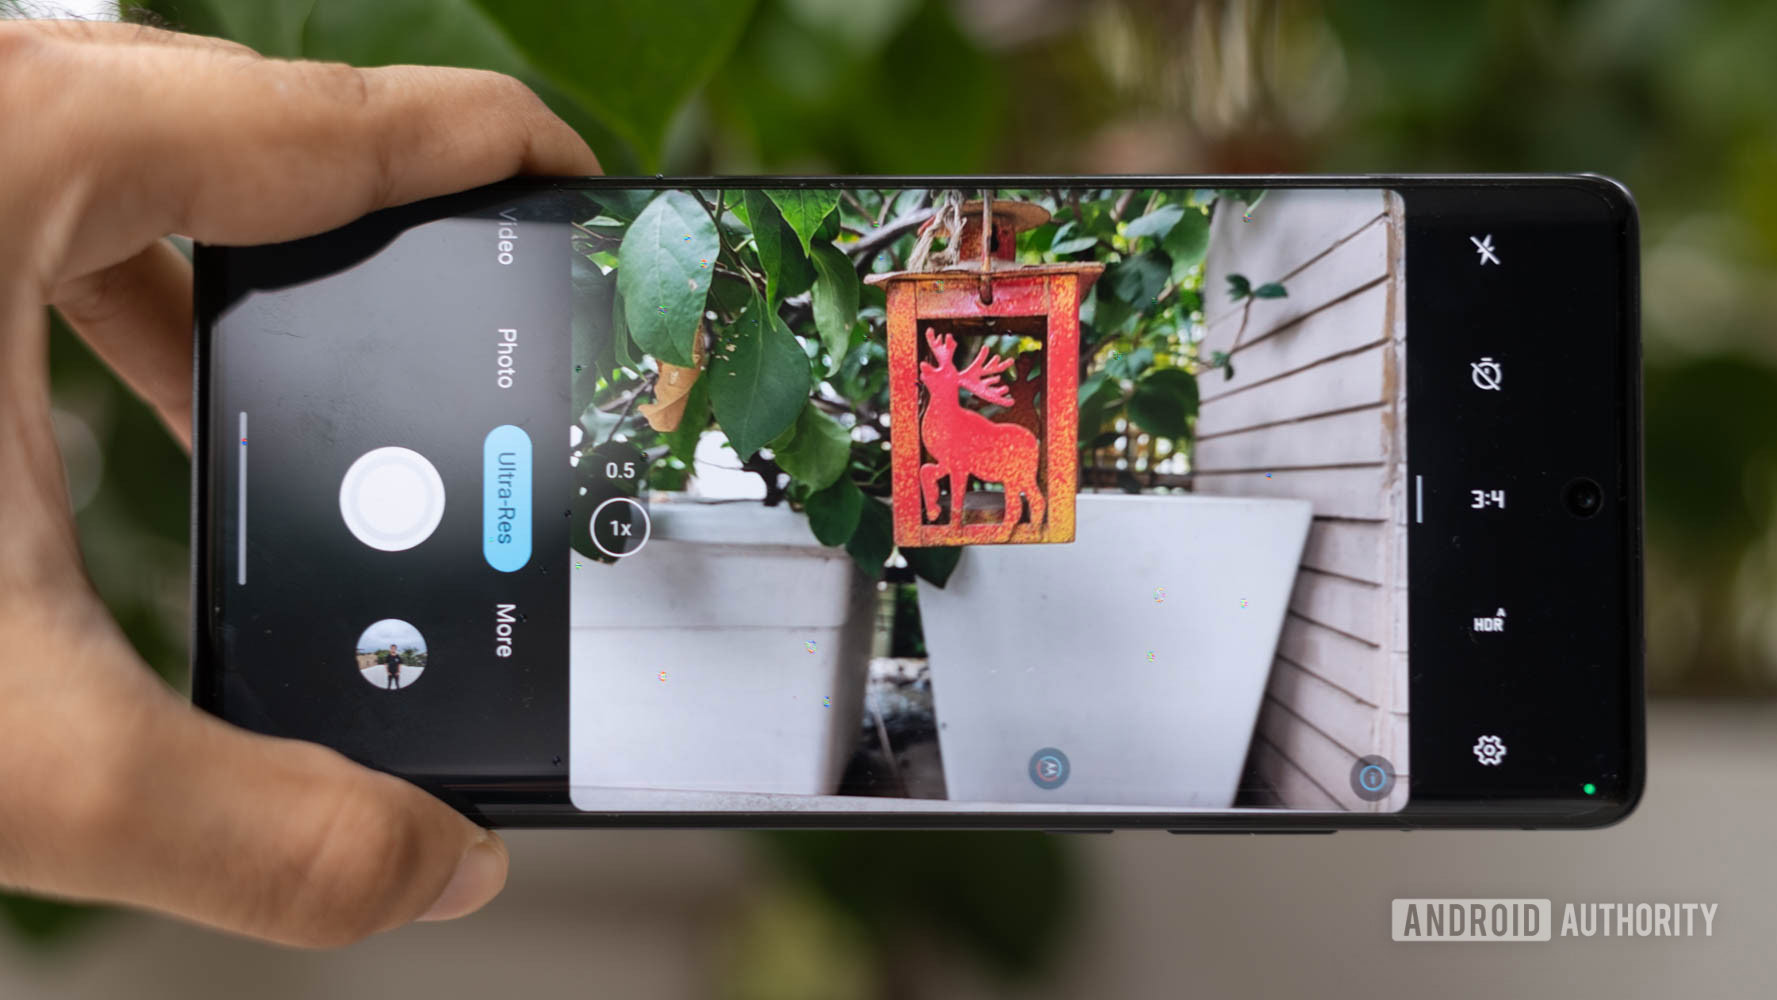 Best Android camera phone - motorola edge 30 pro